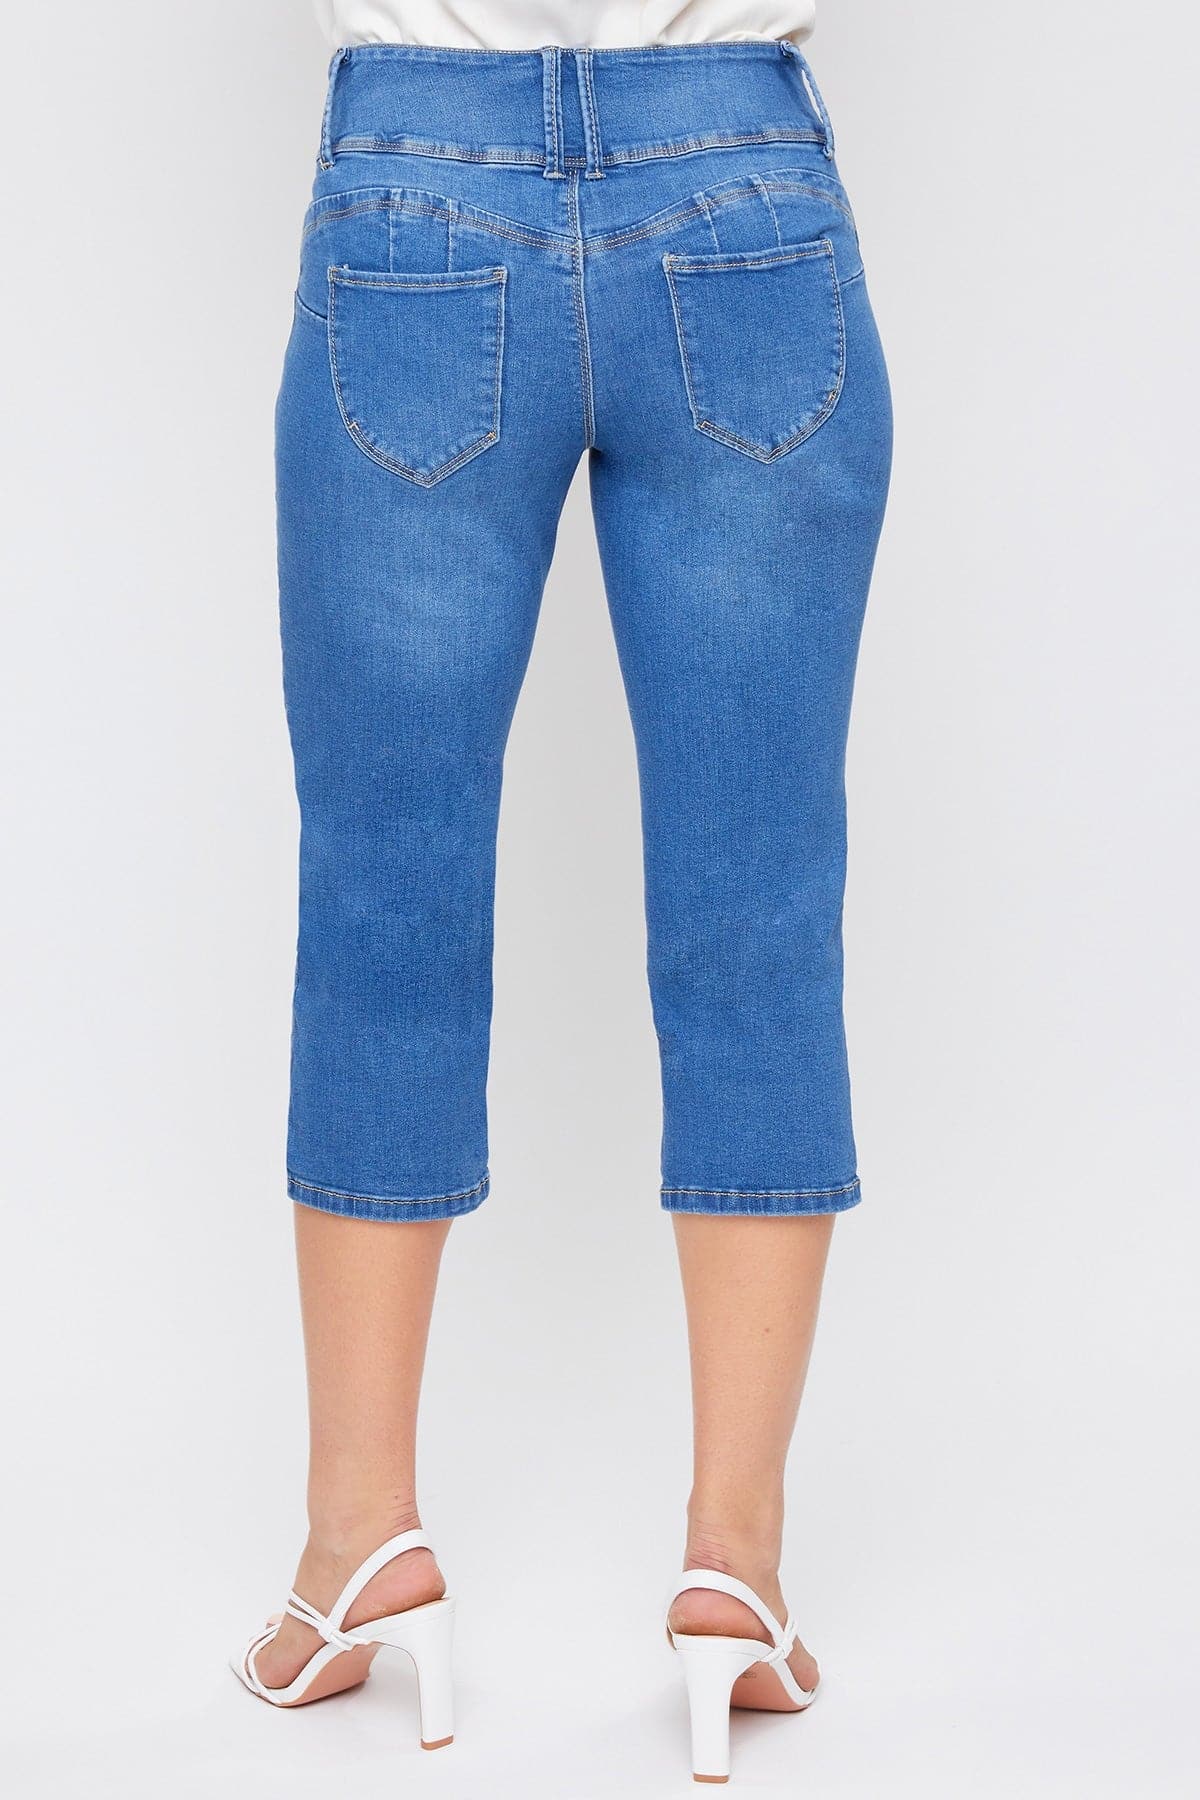 Buy Women Blue Solid Straight Fit Capris Online - 253469